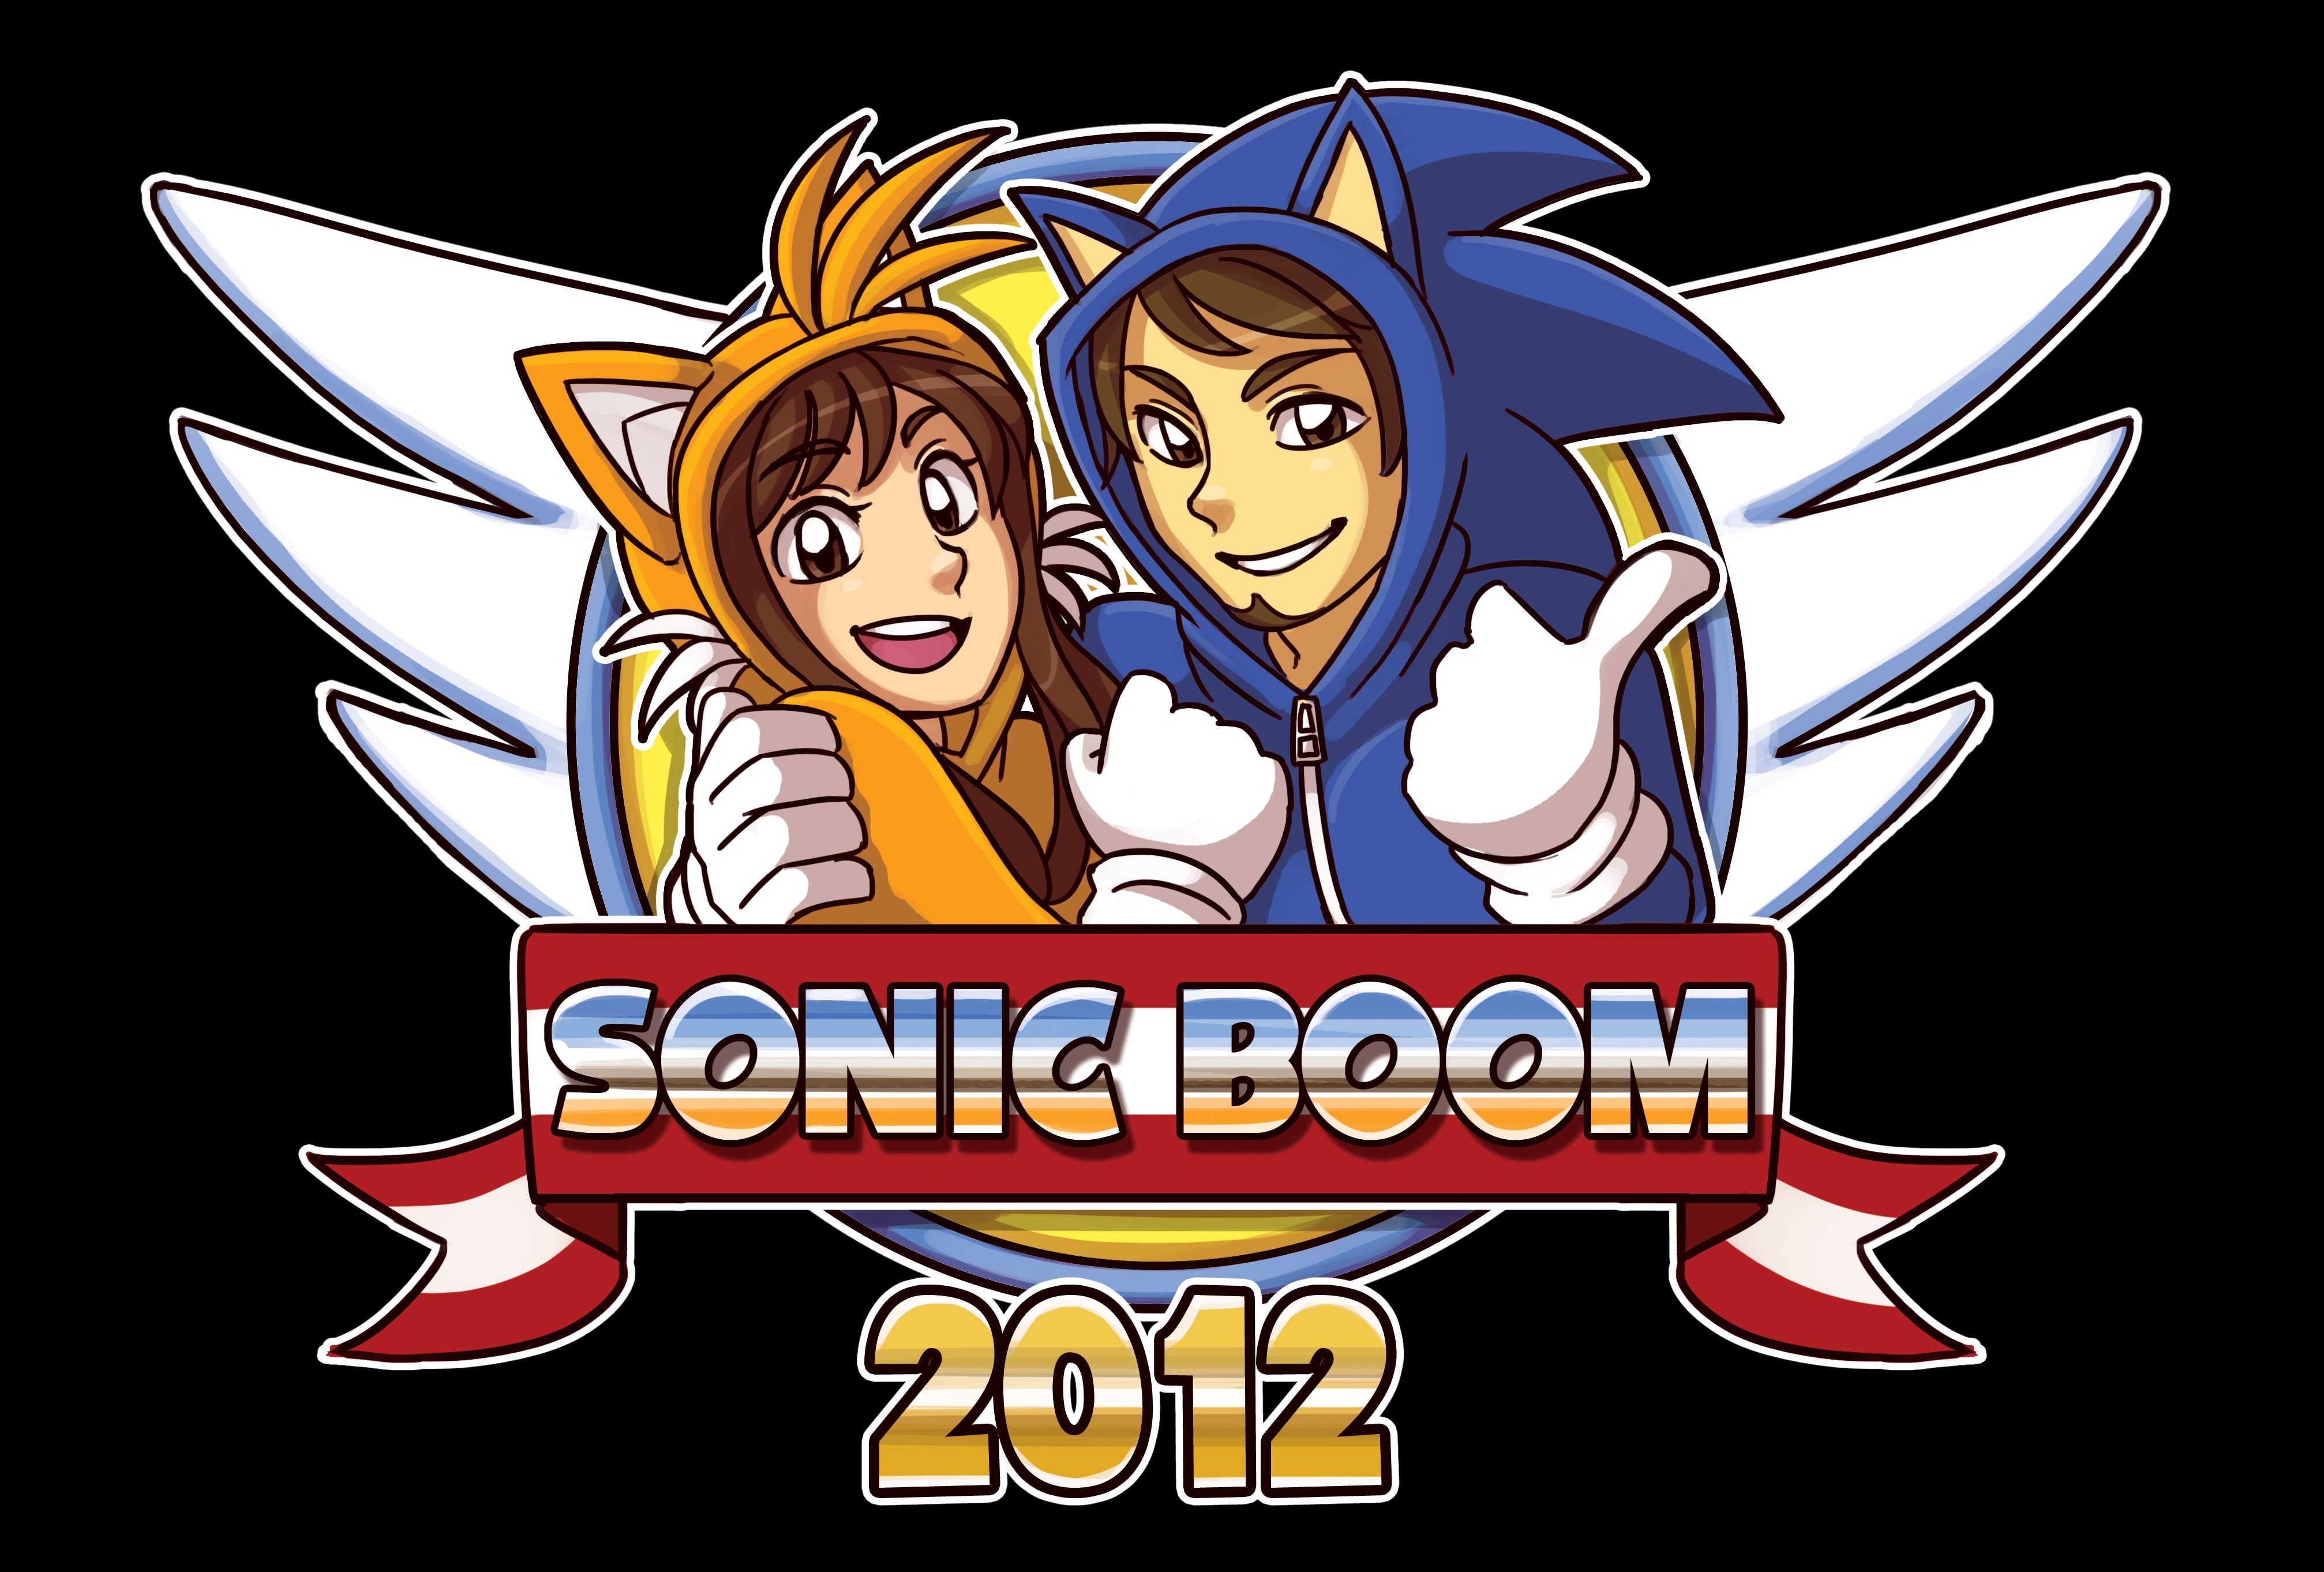 Descarga gratuita de fondo de pantalla para móvil de Sonic The Hedgehog, Sonic, Videojuego.